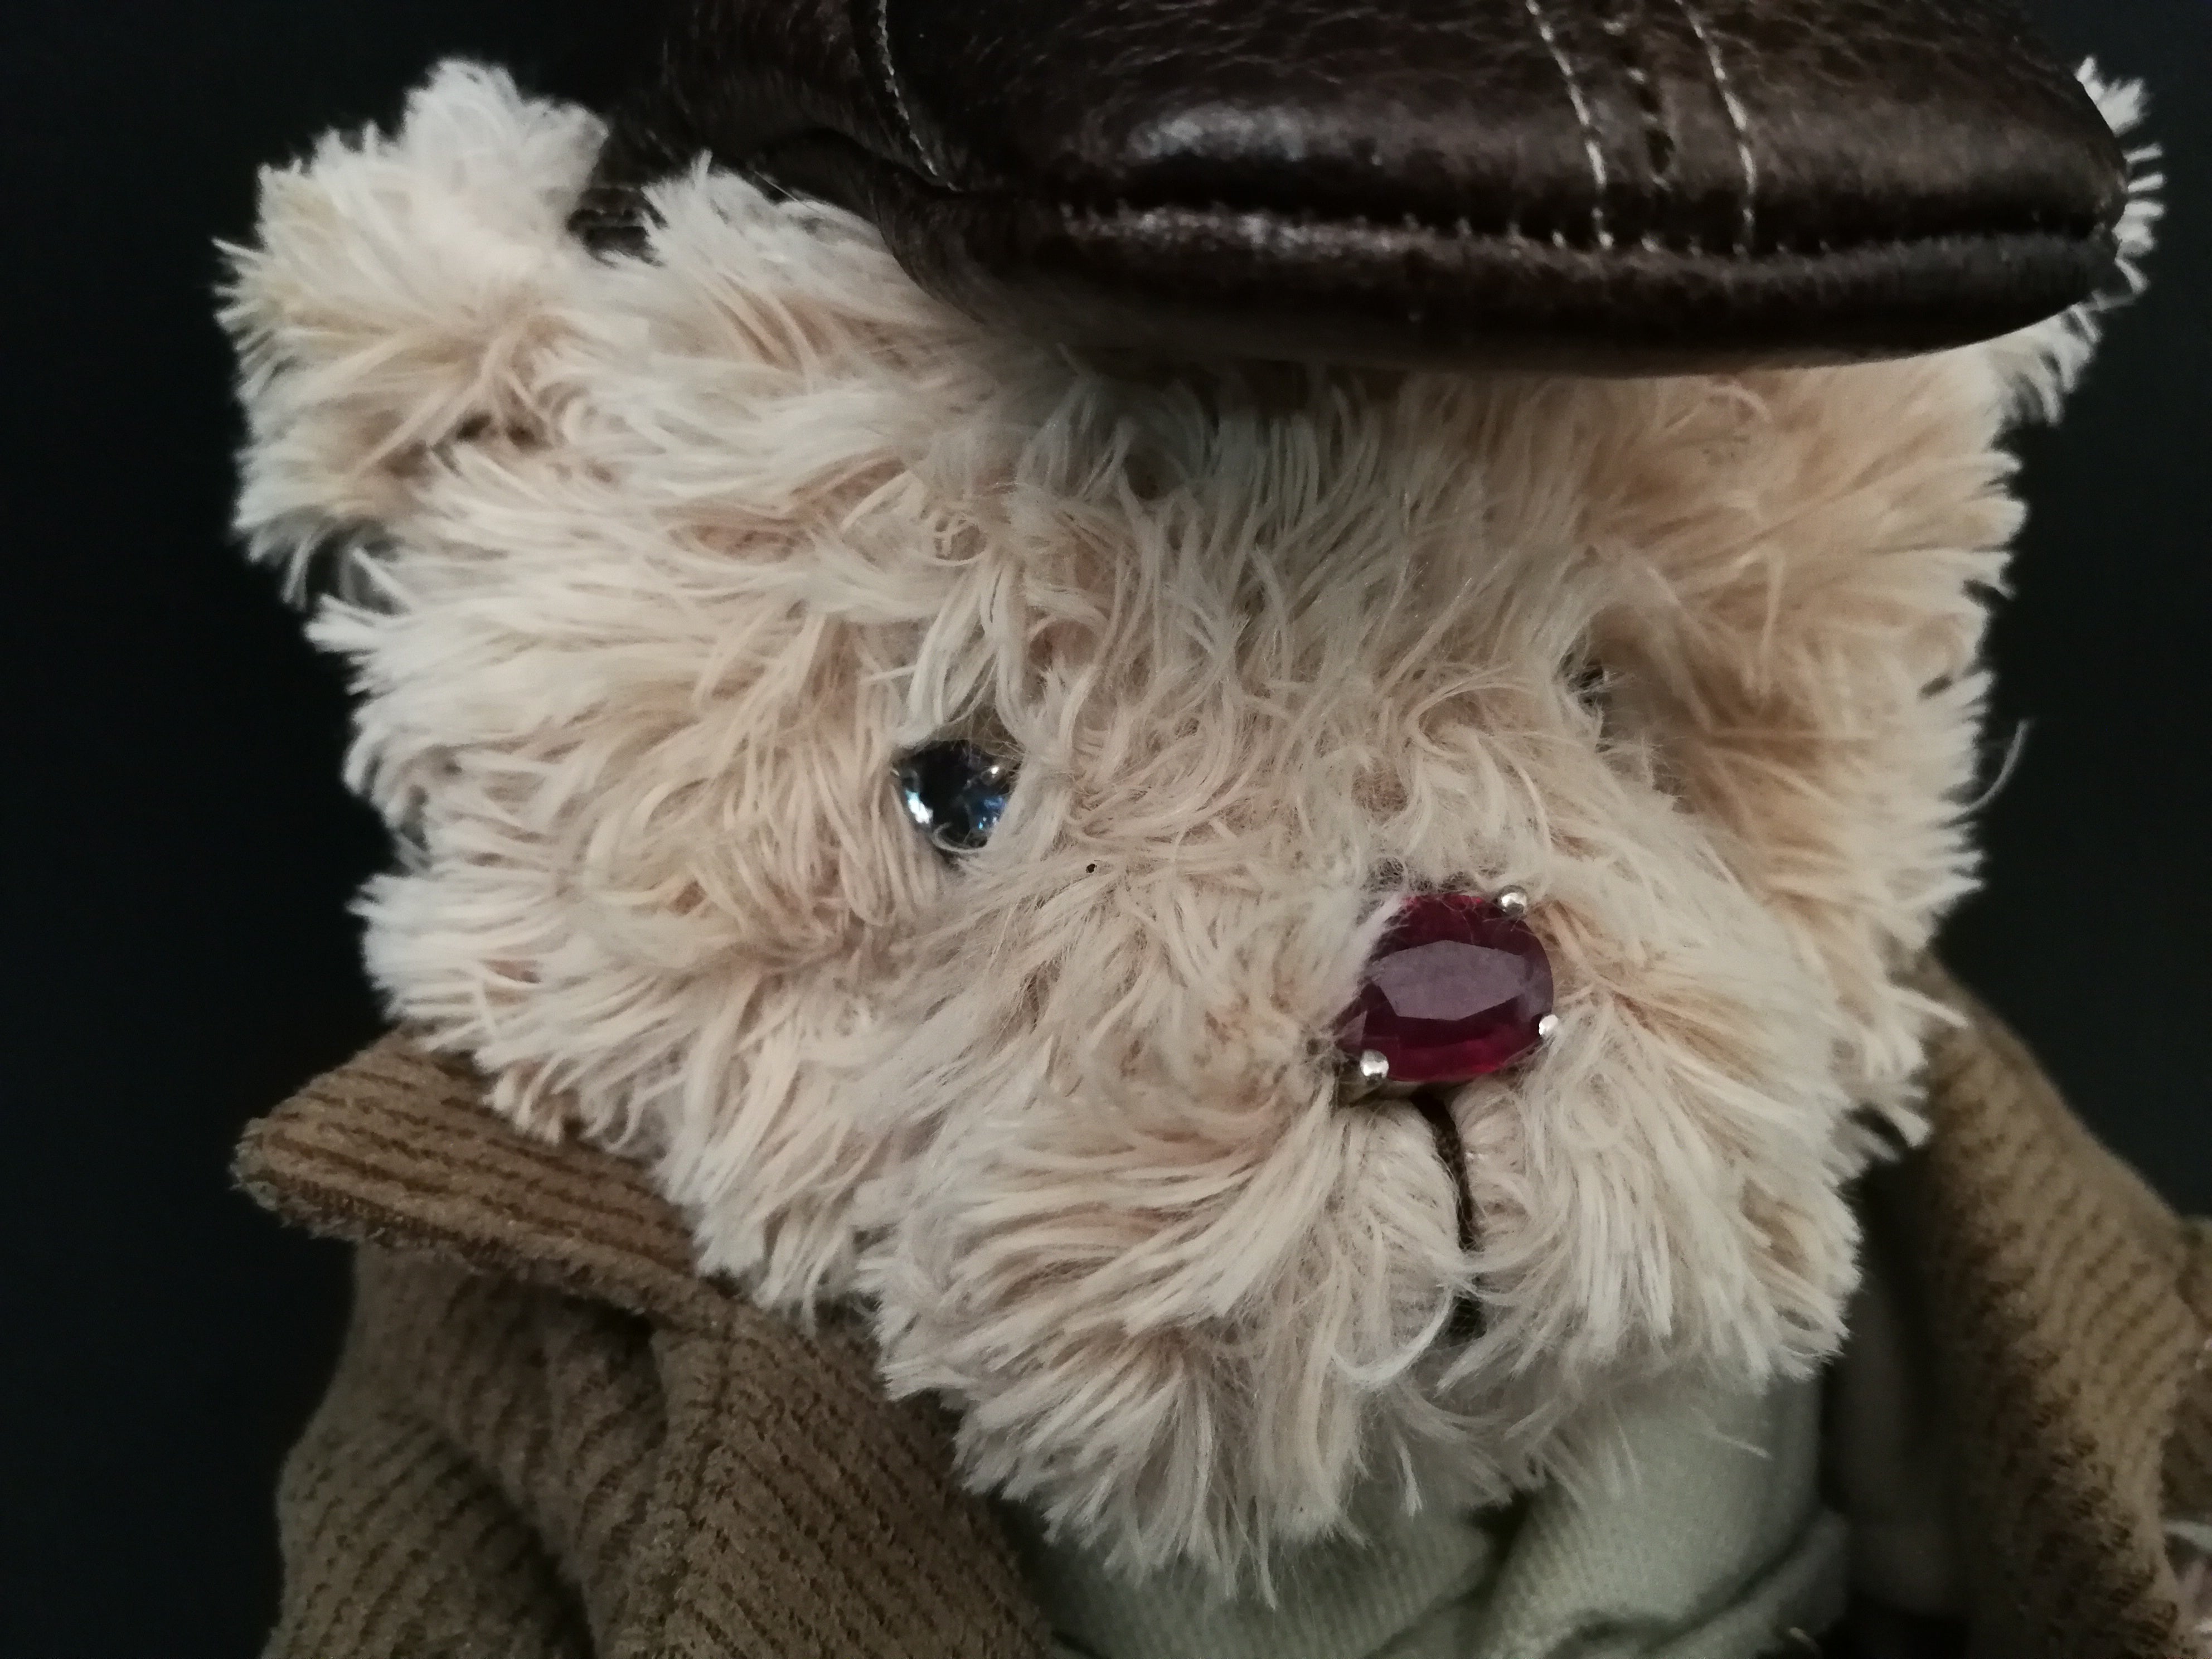 Stadl teddy bear shcalk range view of ruby nose and tanzanite eyes